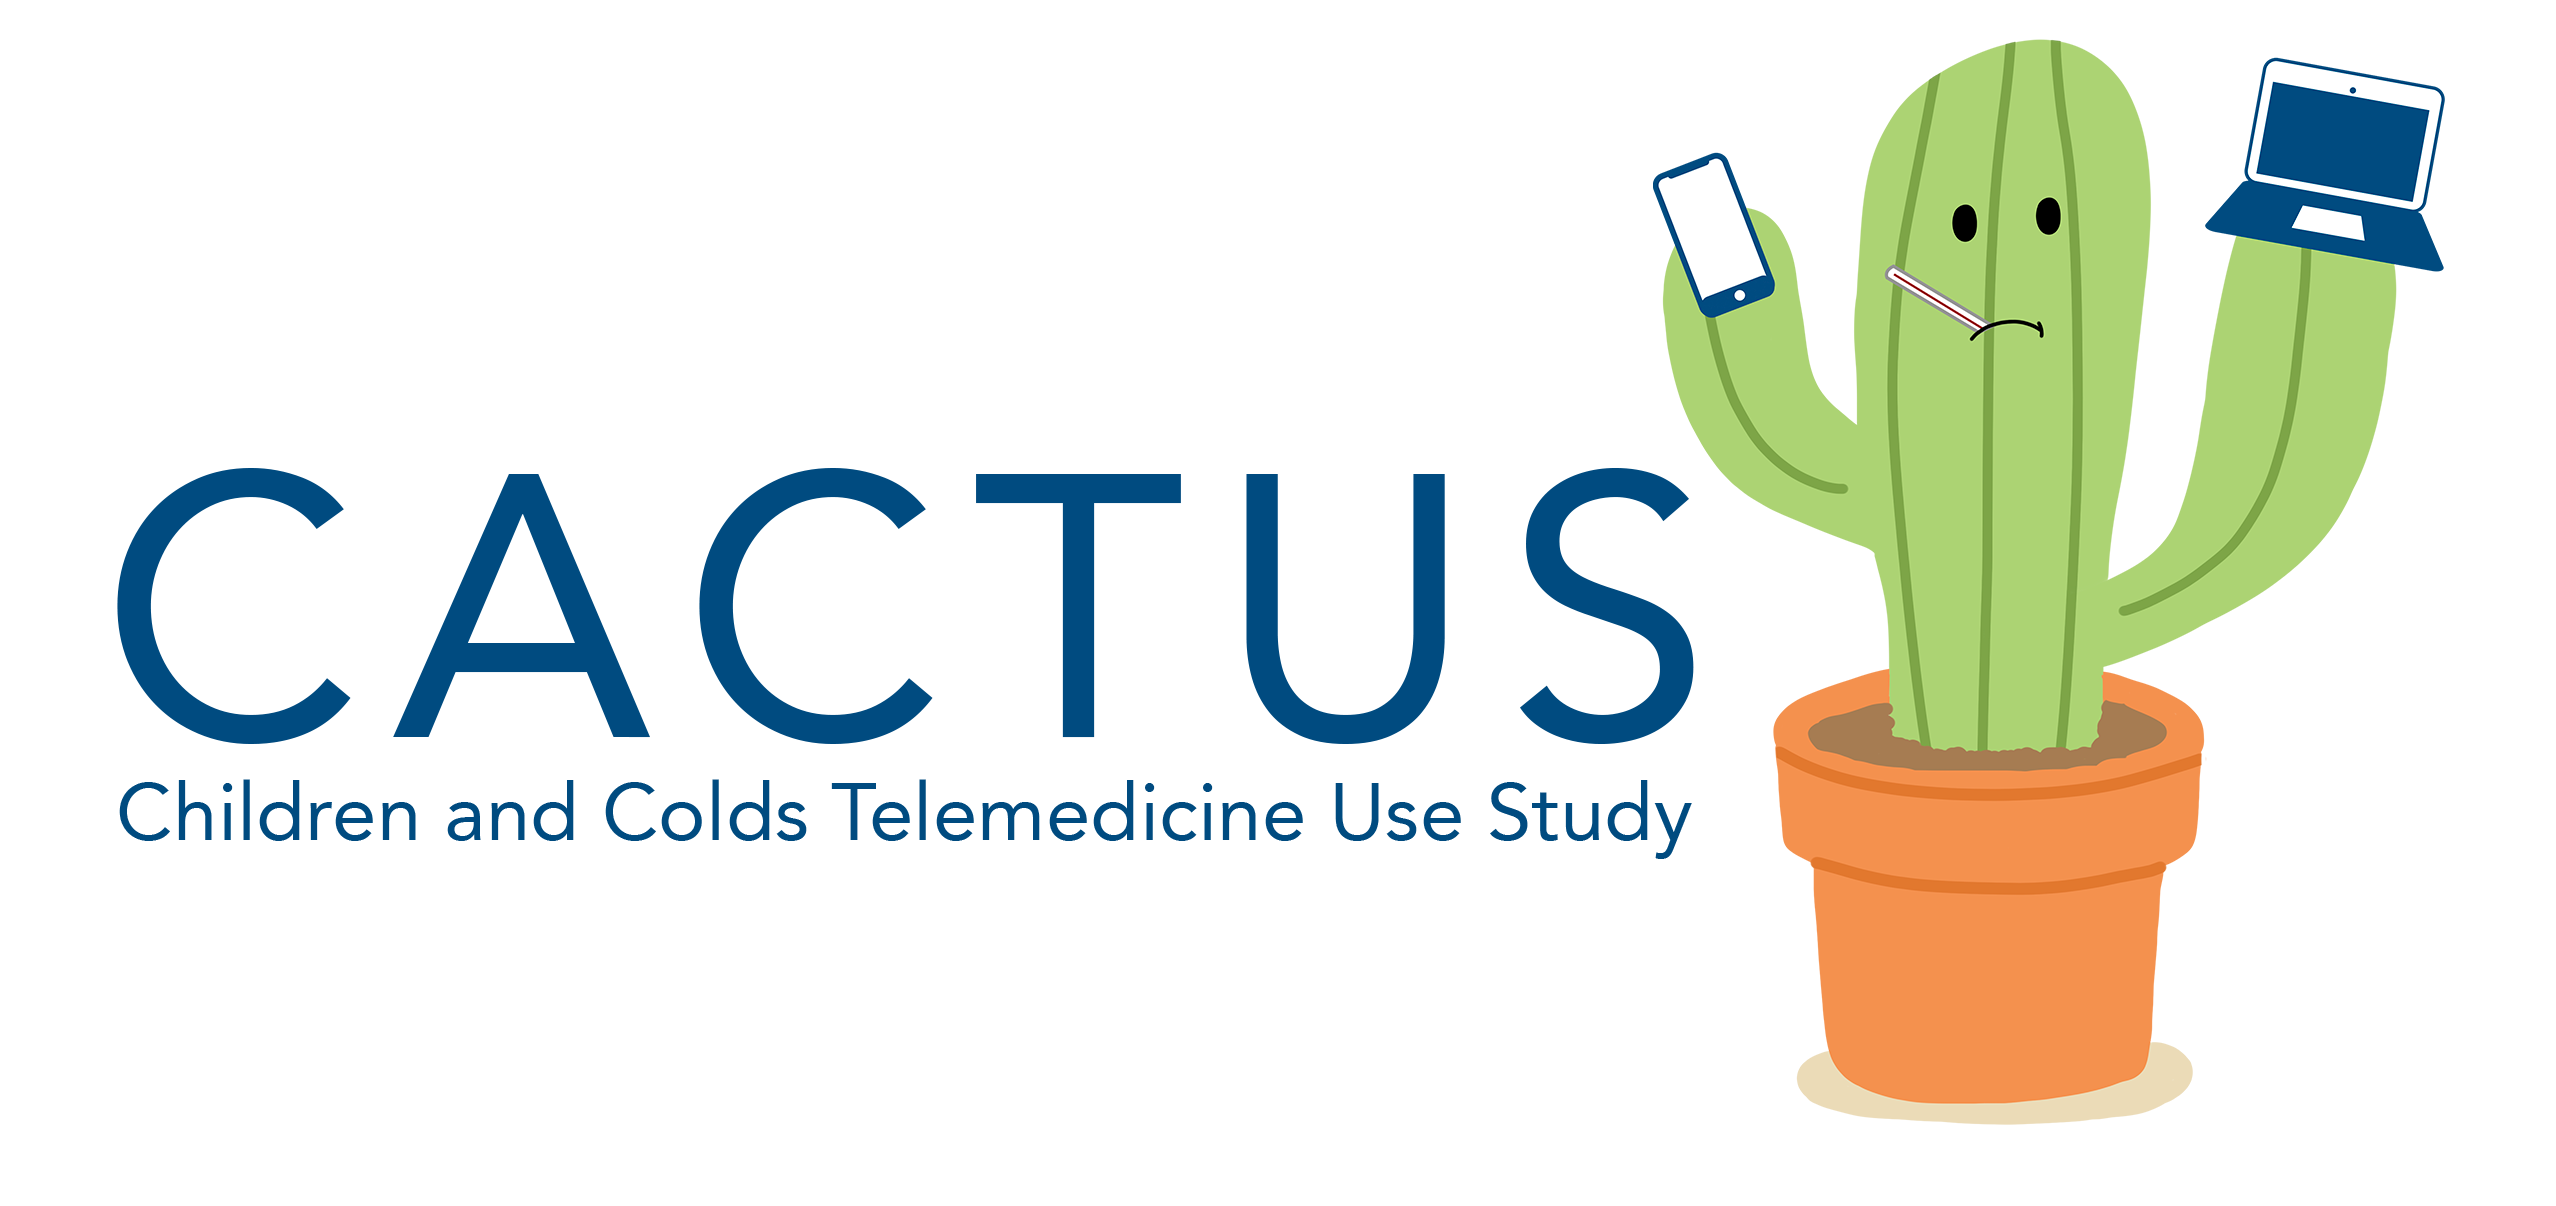 Children and Colds Telemedicine Use Study logo